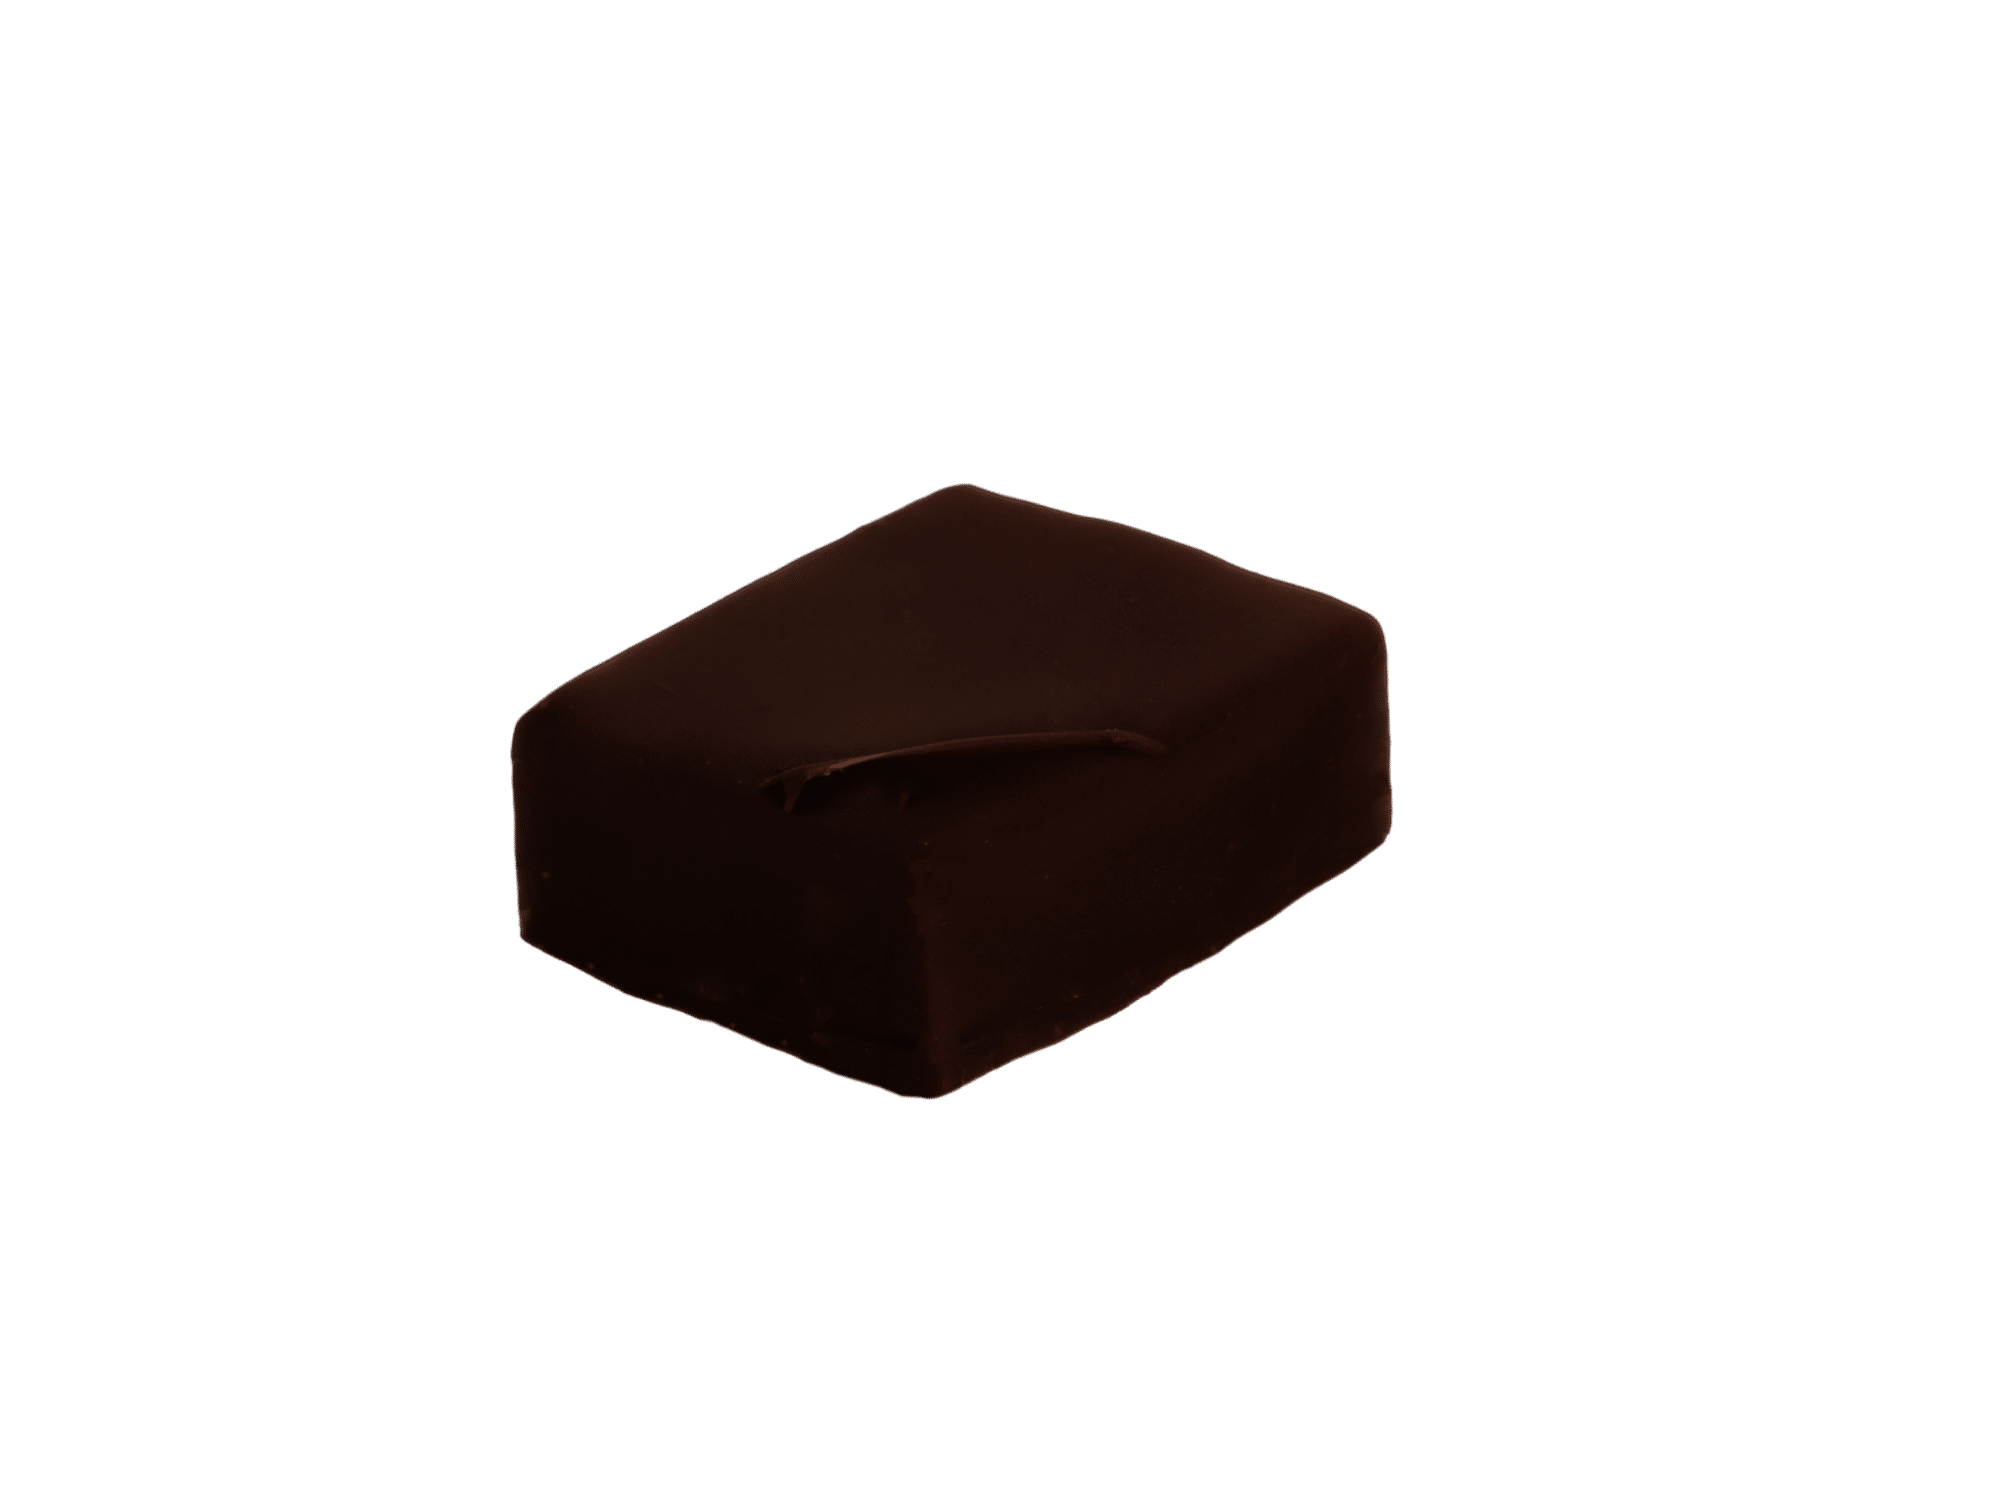 Ganache chocolat noir Pérou (San martin)